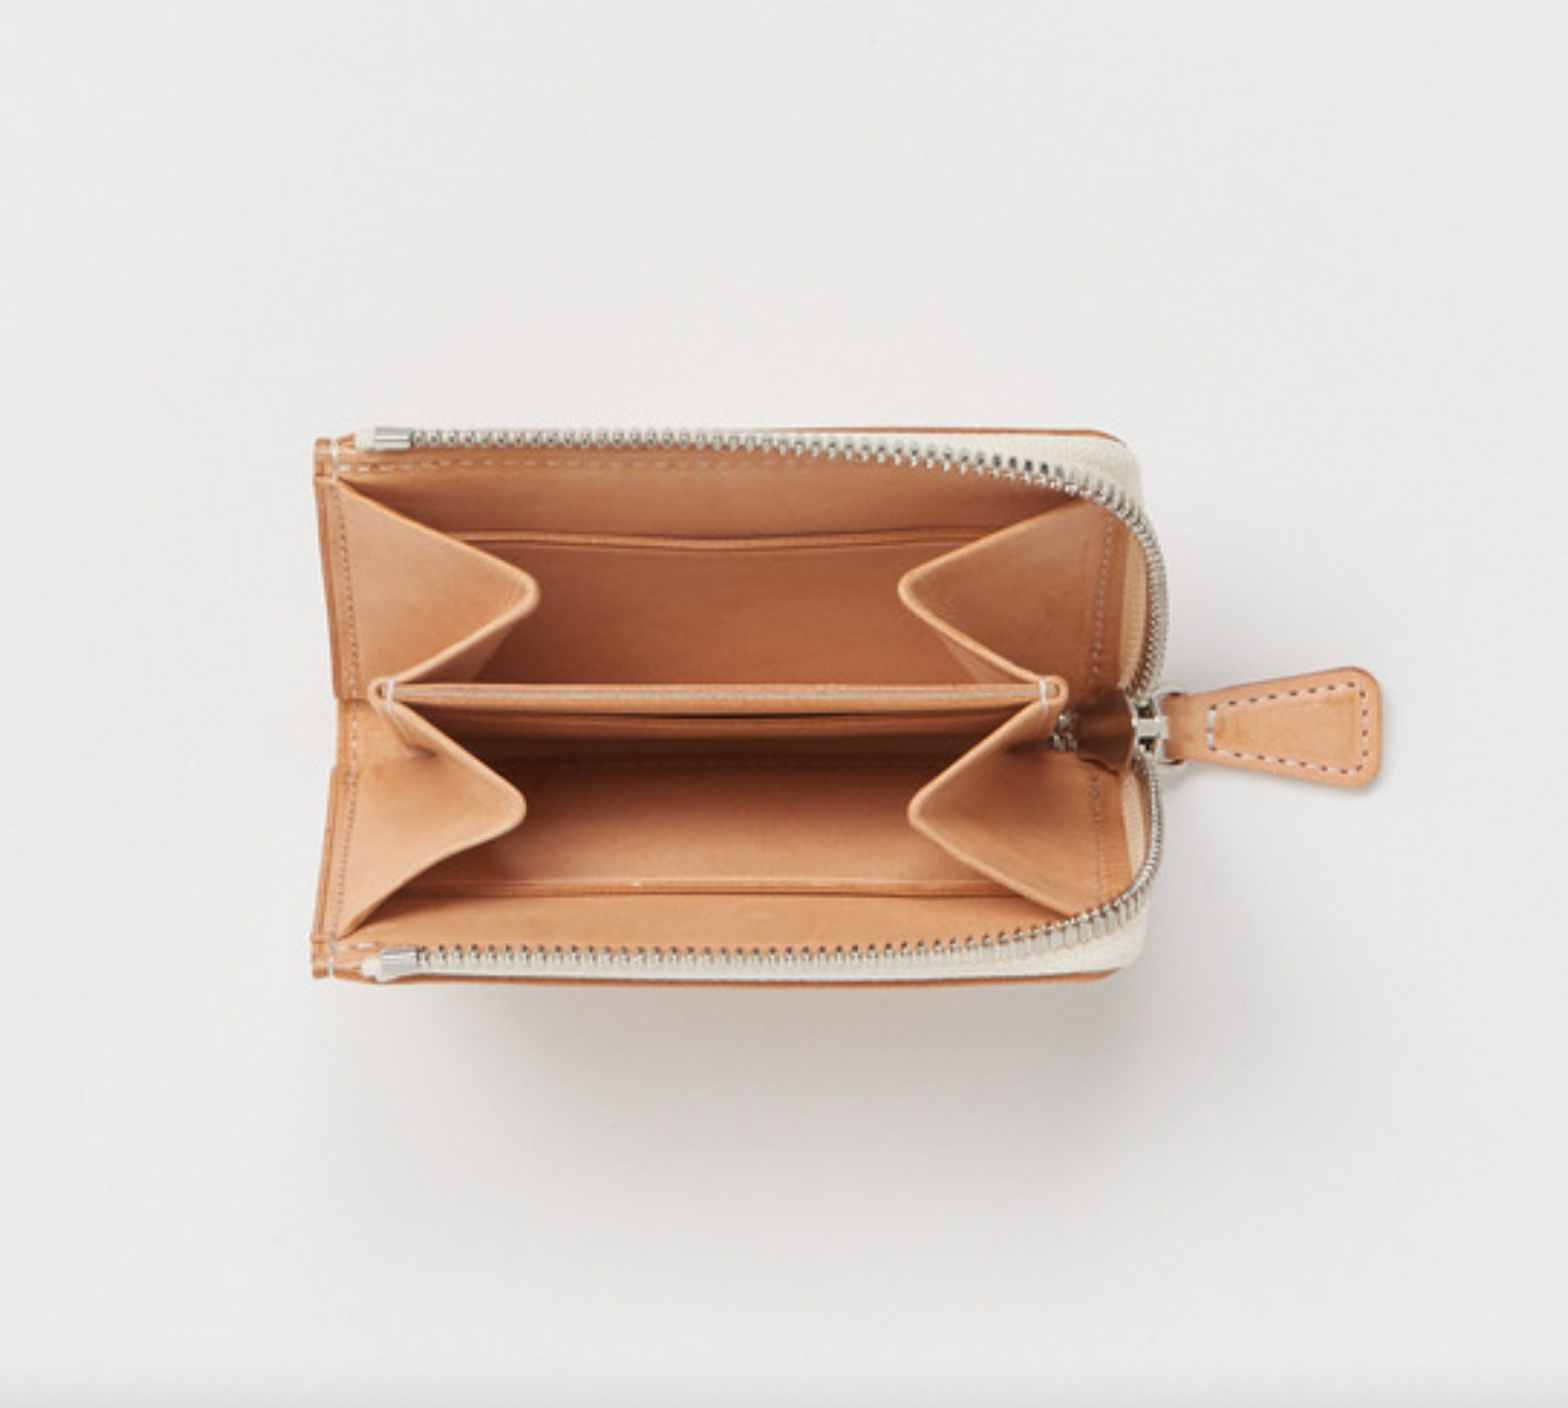 Hender Scheme mini purse – unexpected store